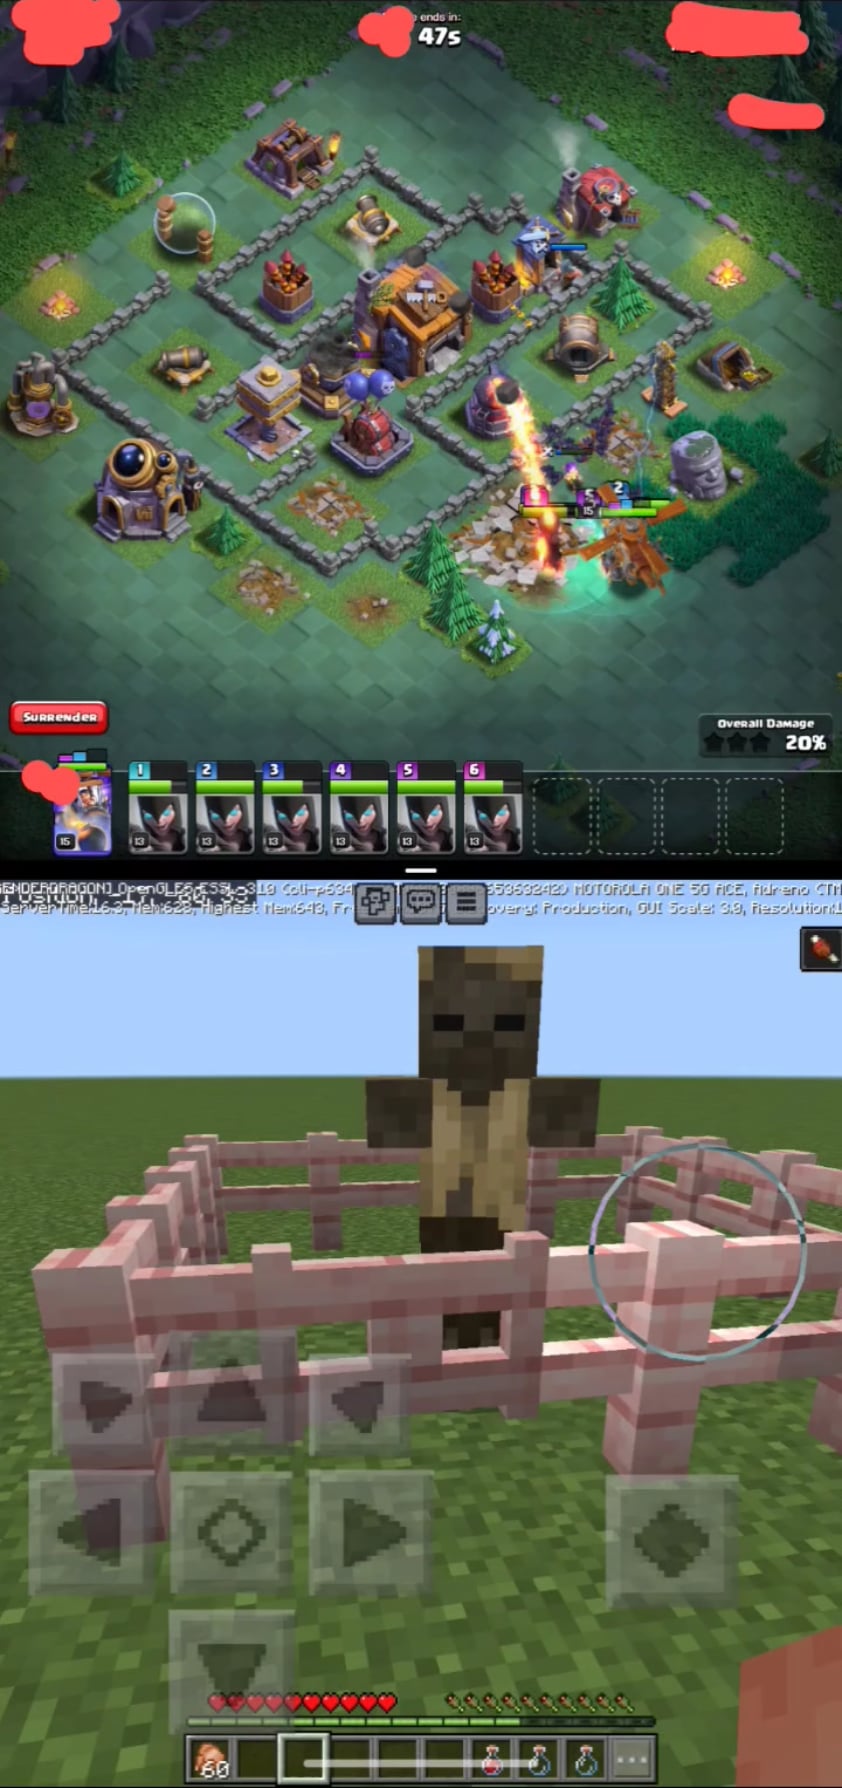 Minecraft Memes - "Rate my mad skills"